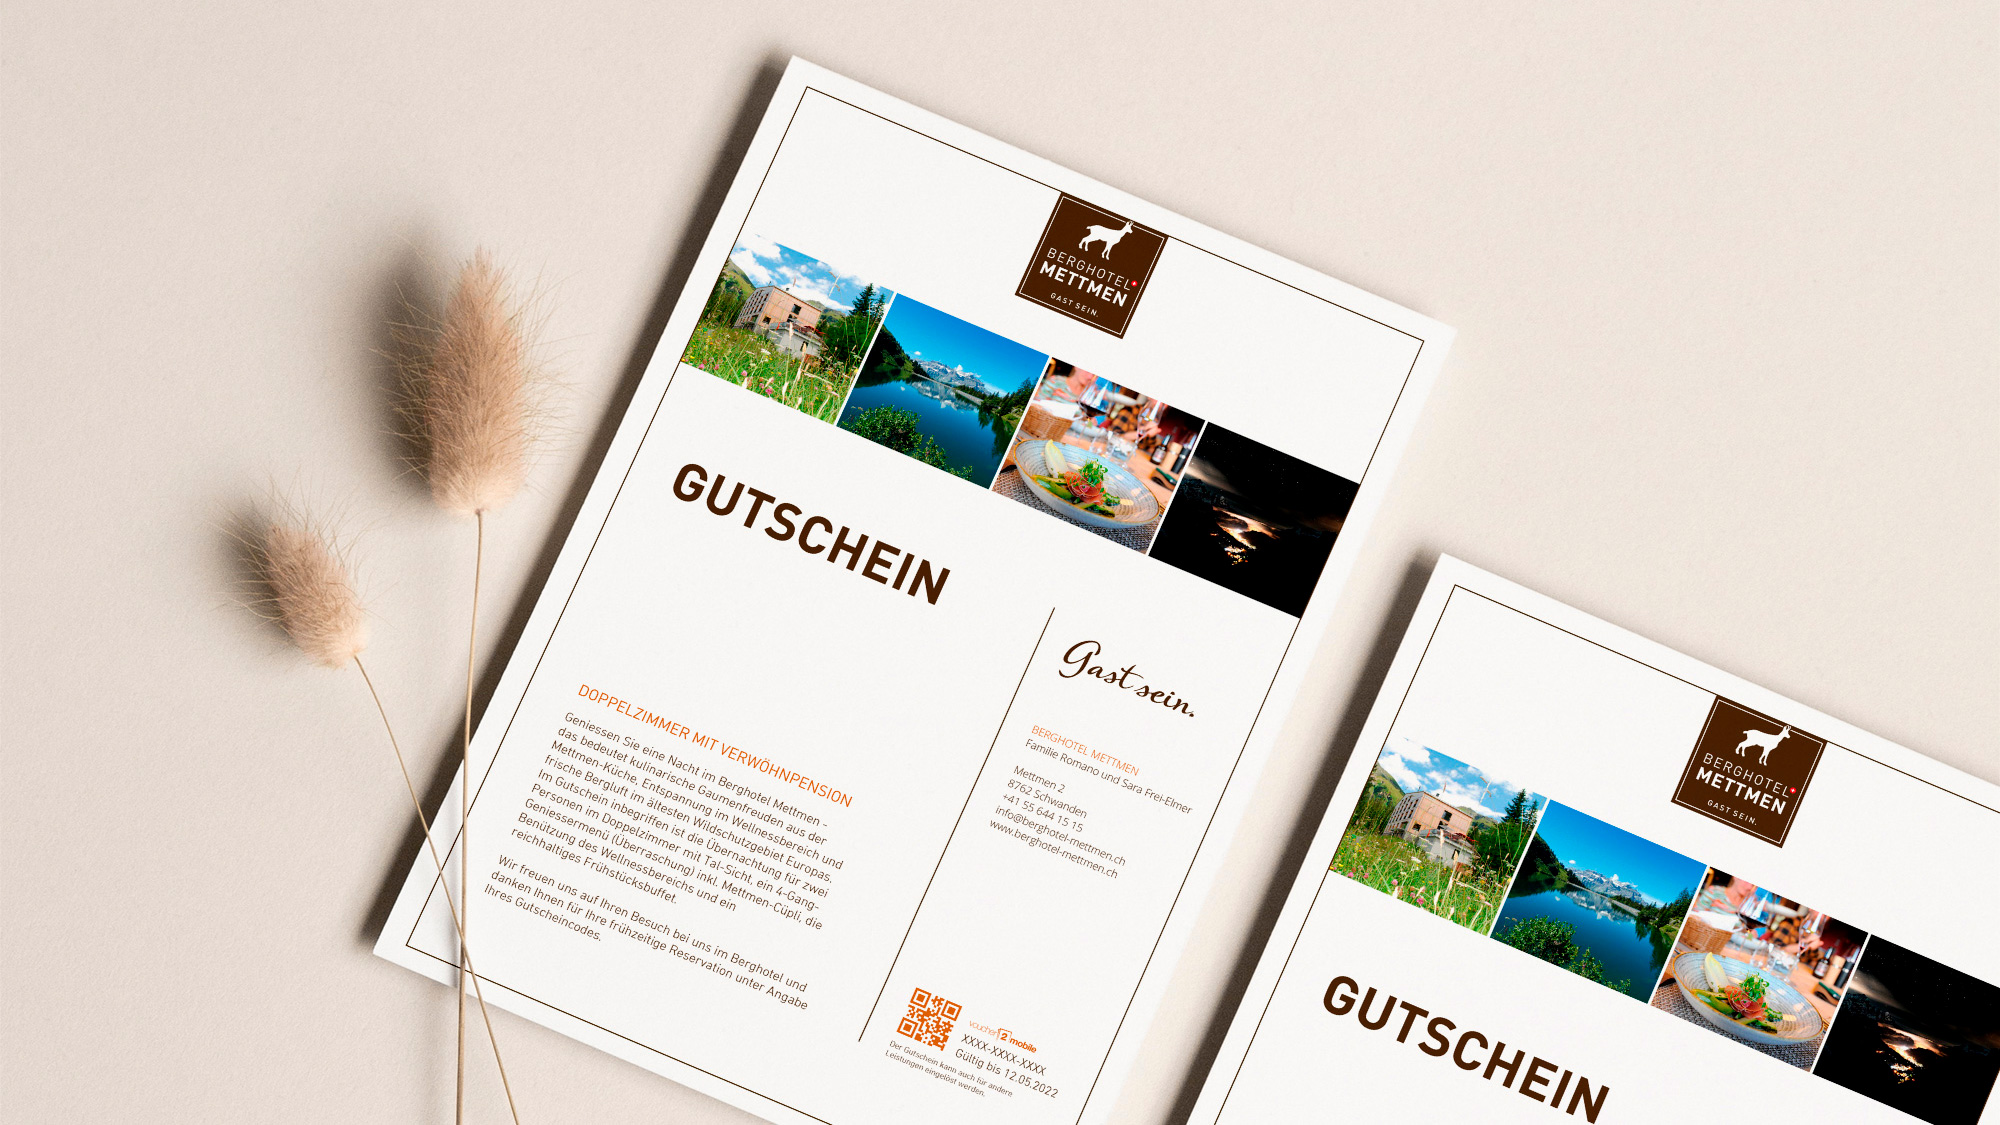 e-guma Gutscheinsystem Gutscheinlayout print@home Berghotel Mettmen